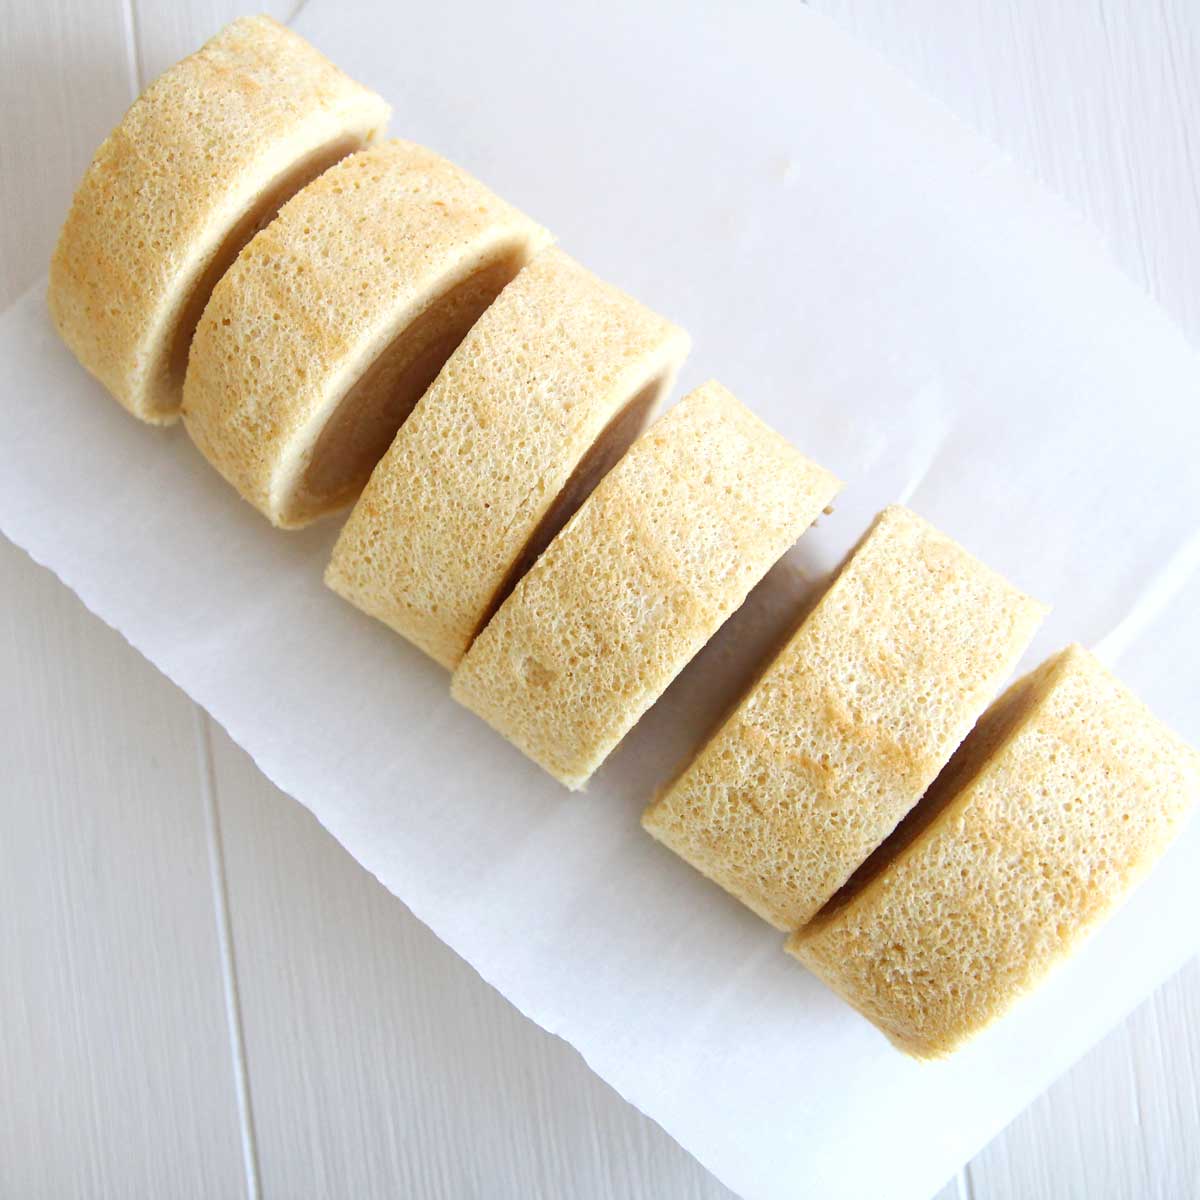 Flourless Peanut Butter Swiss Roll Cake with a Sweet Peanut Cream Filling - Peanut Butter Swiss Roll Cake